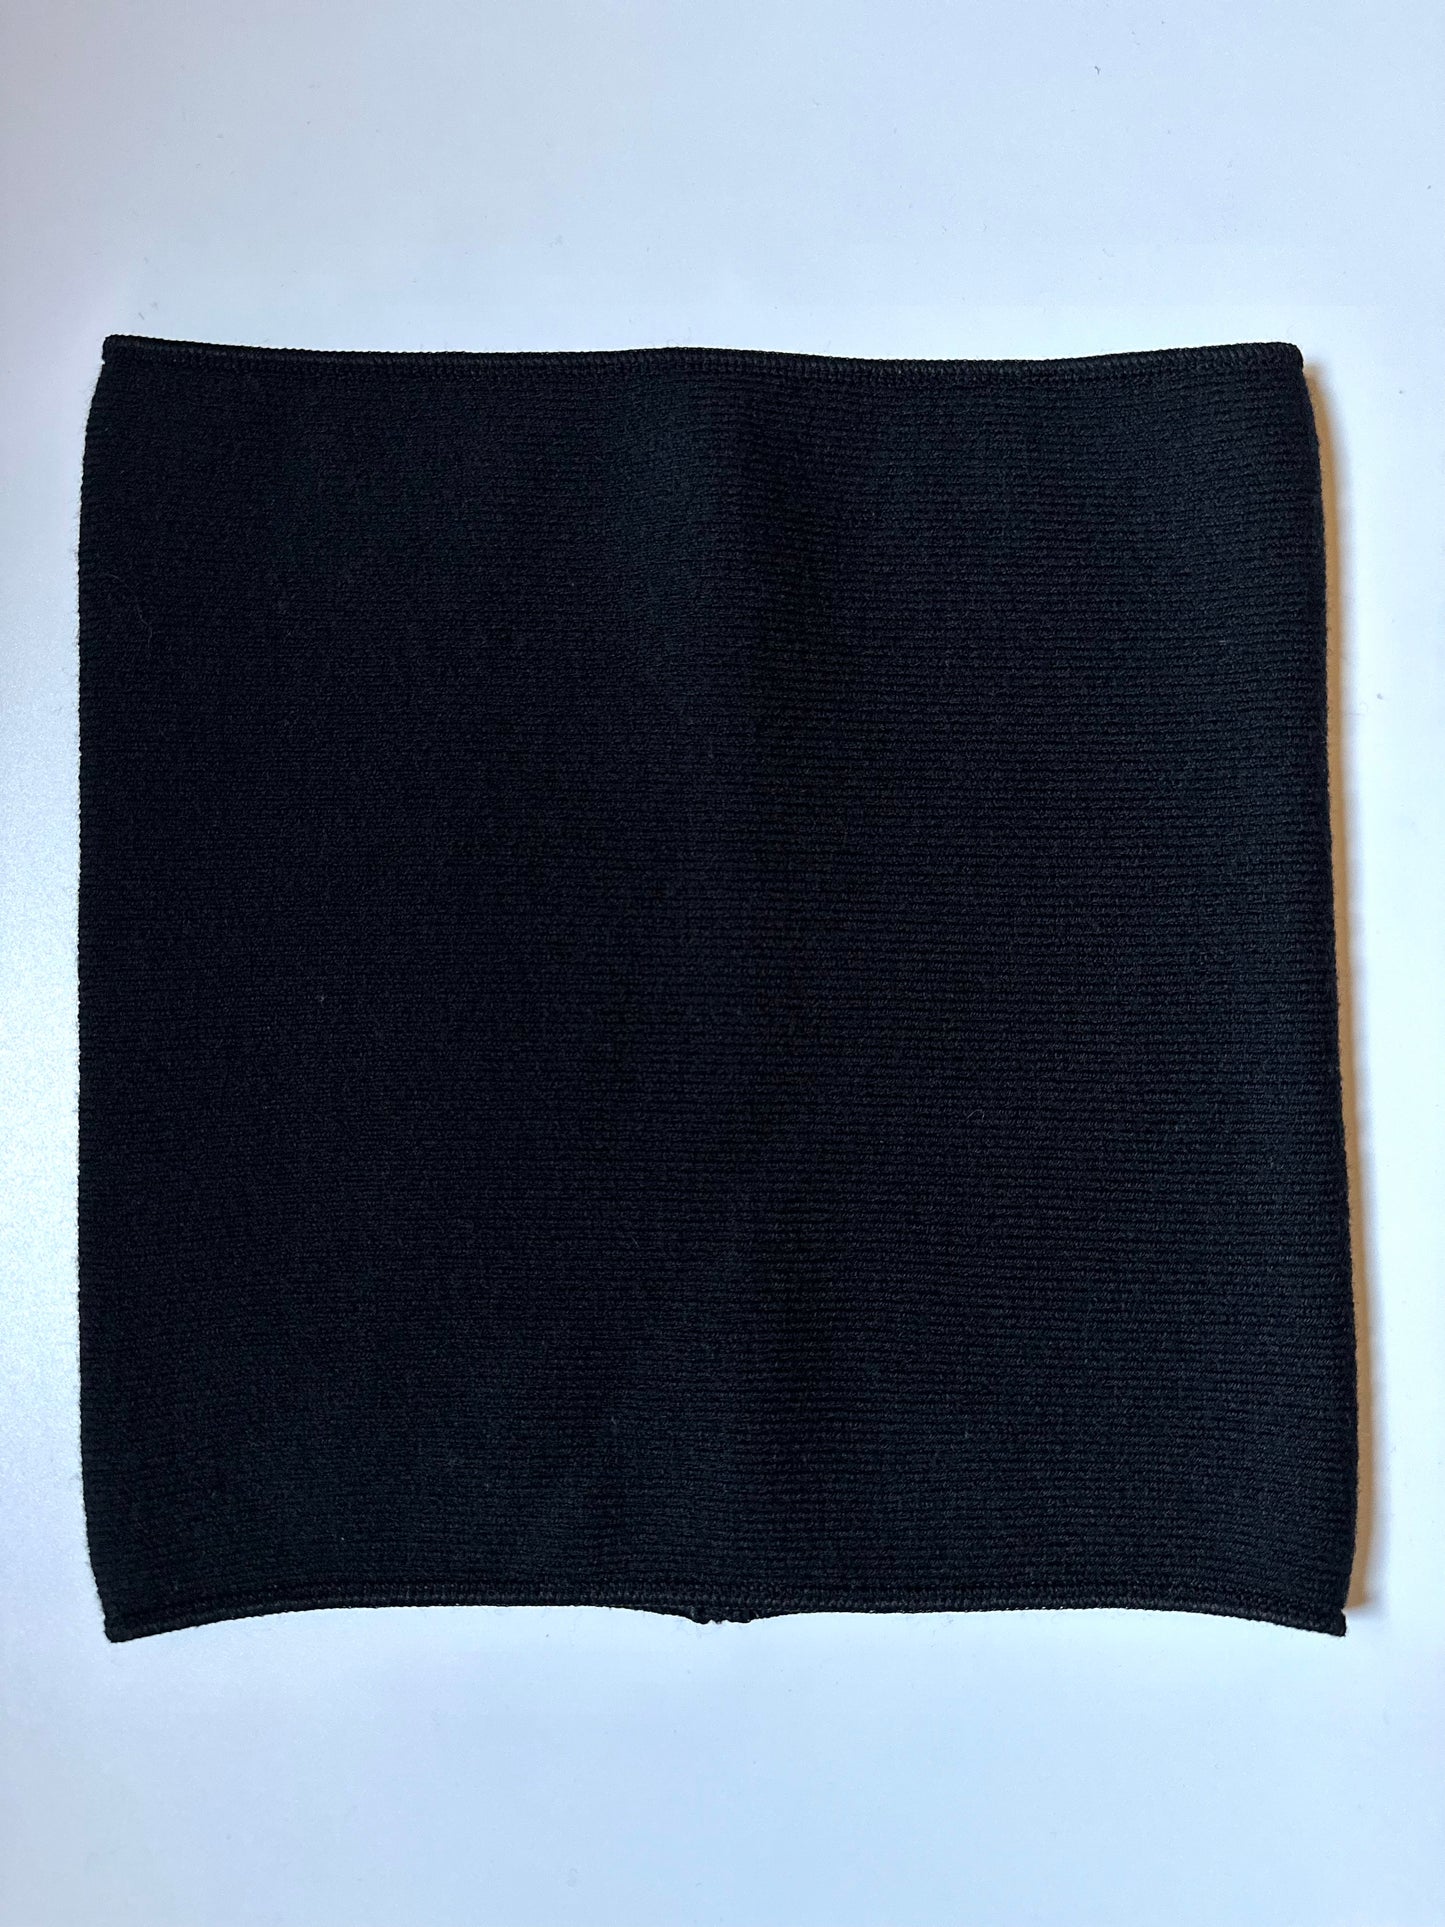 Black merino wool stomach warmer for winter